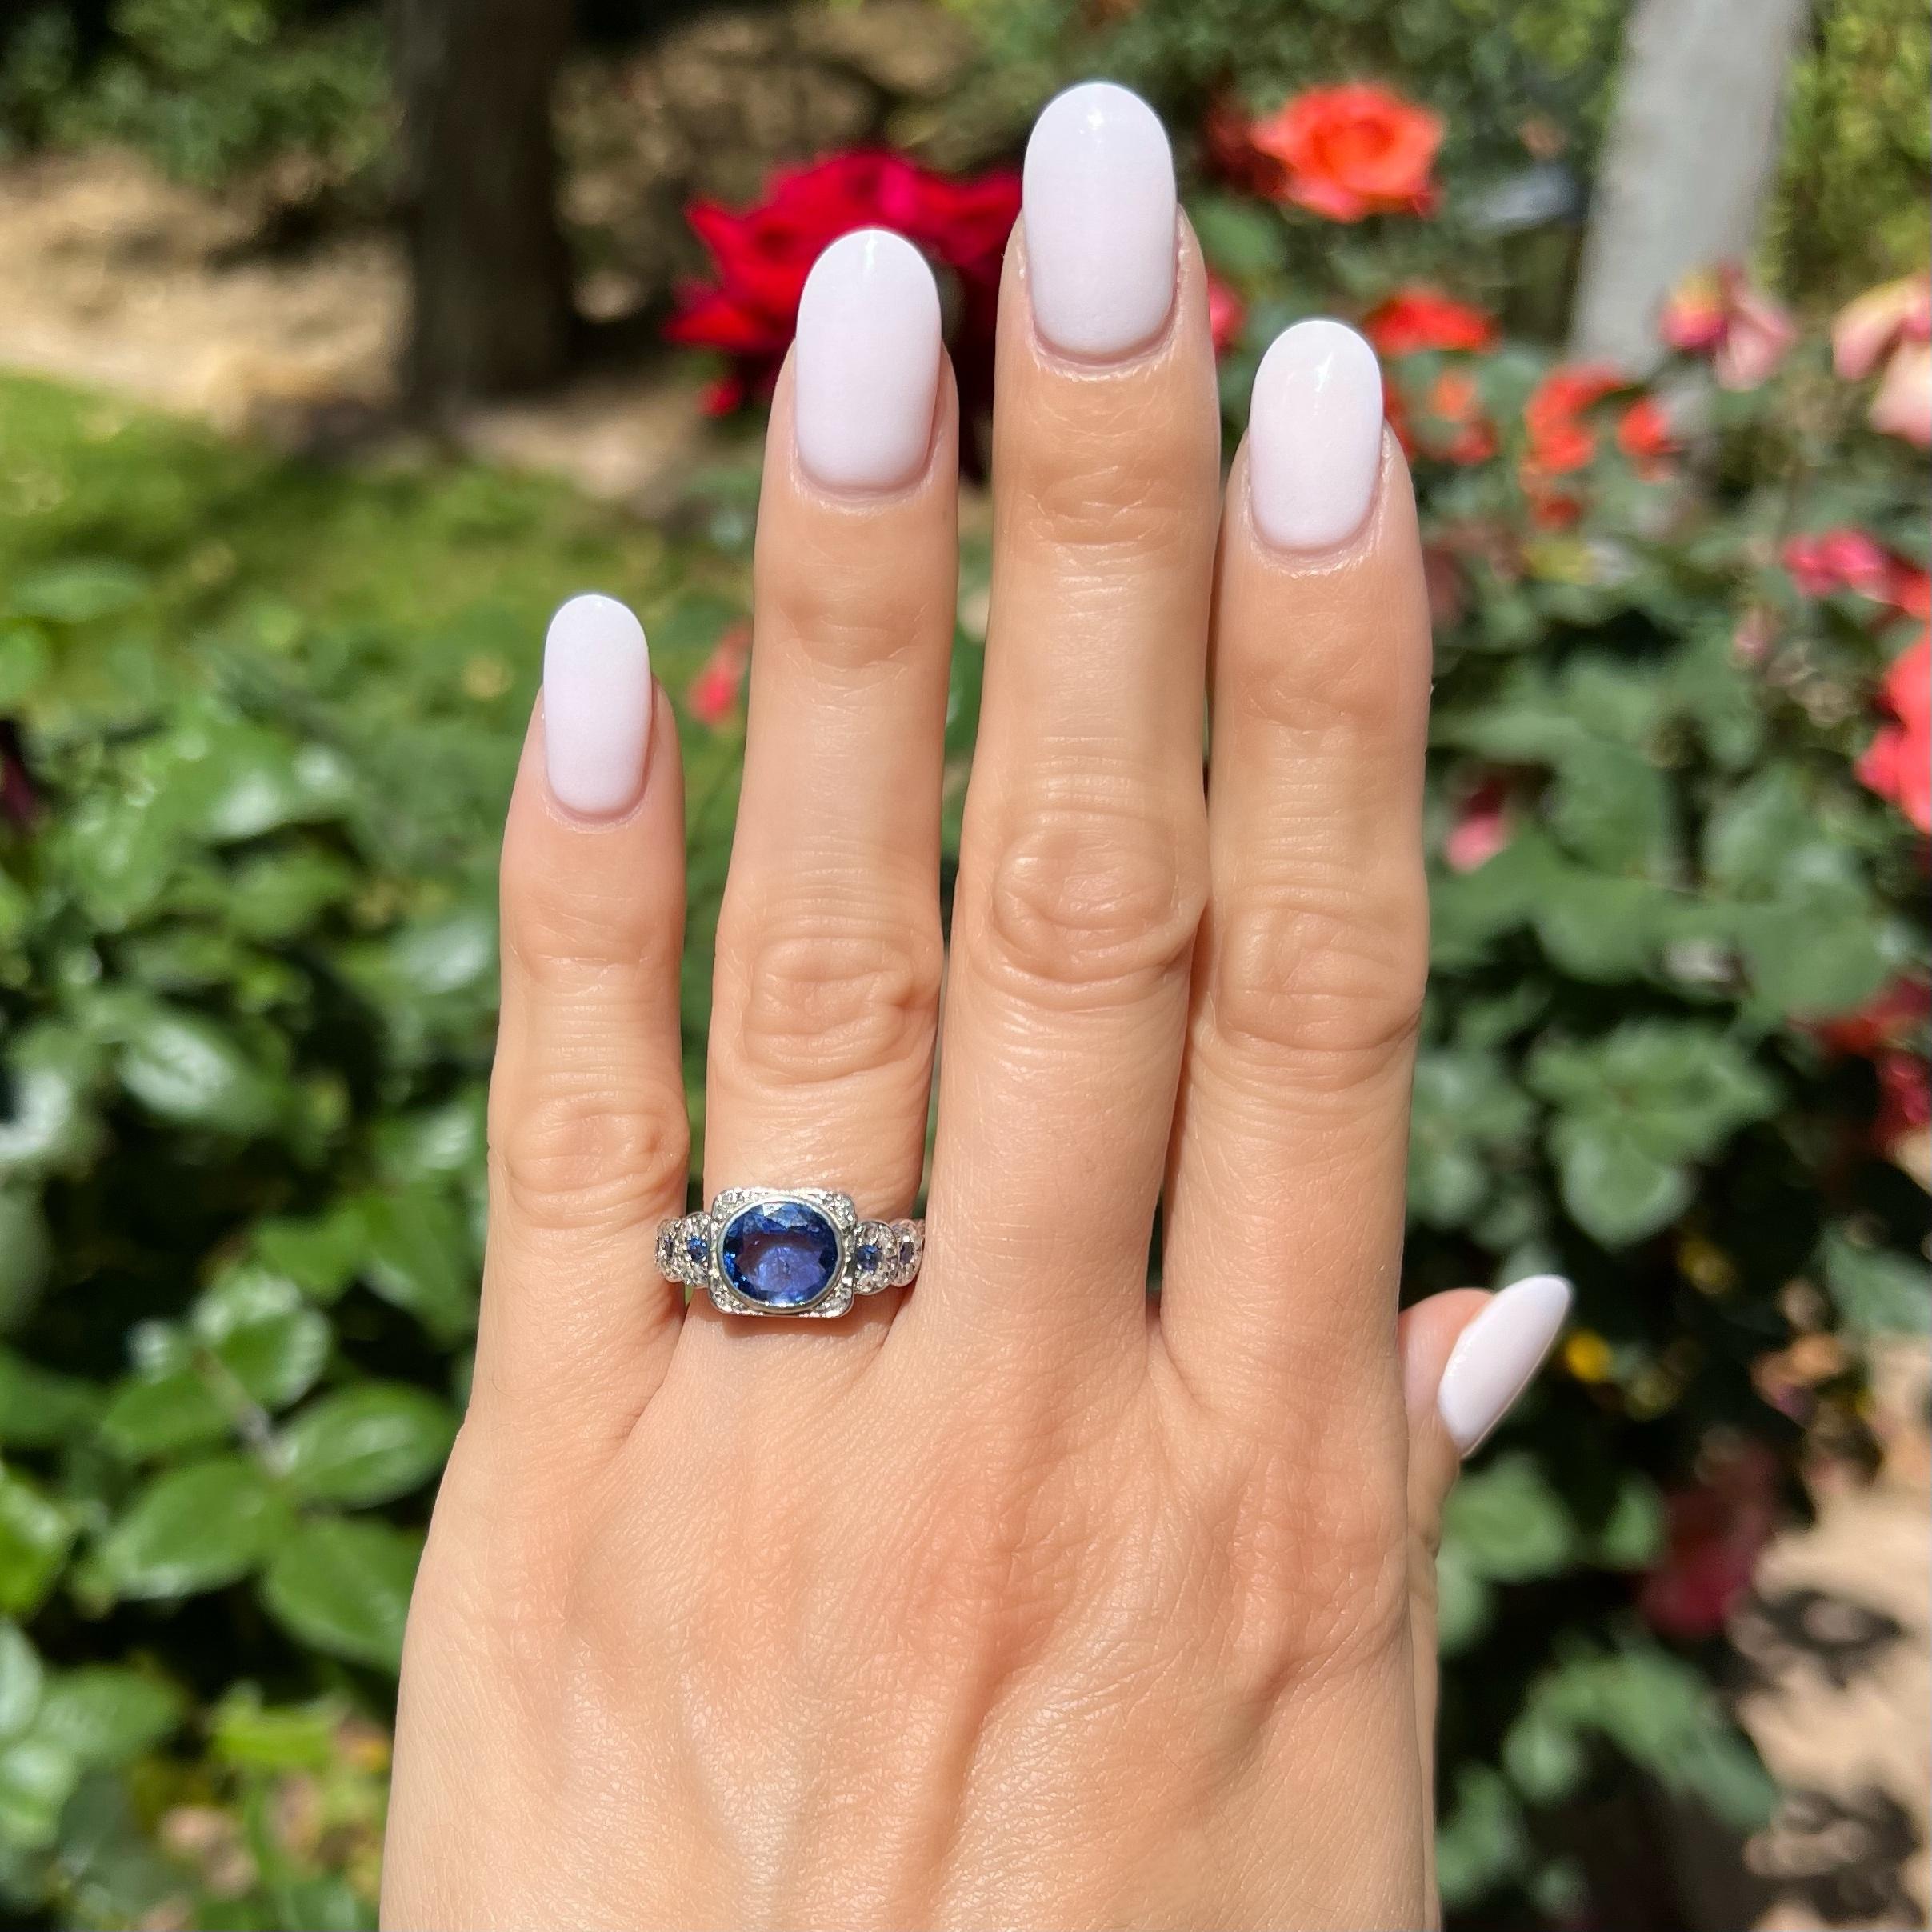 2 carat sapphire ring with diamonds